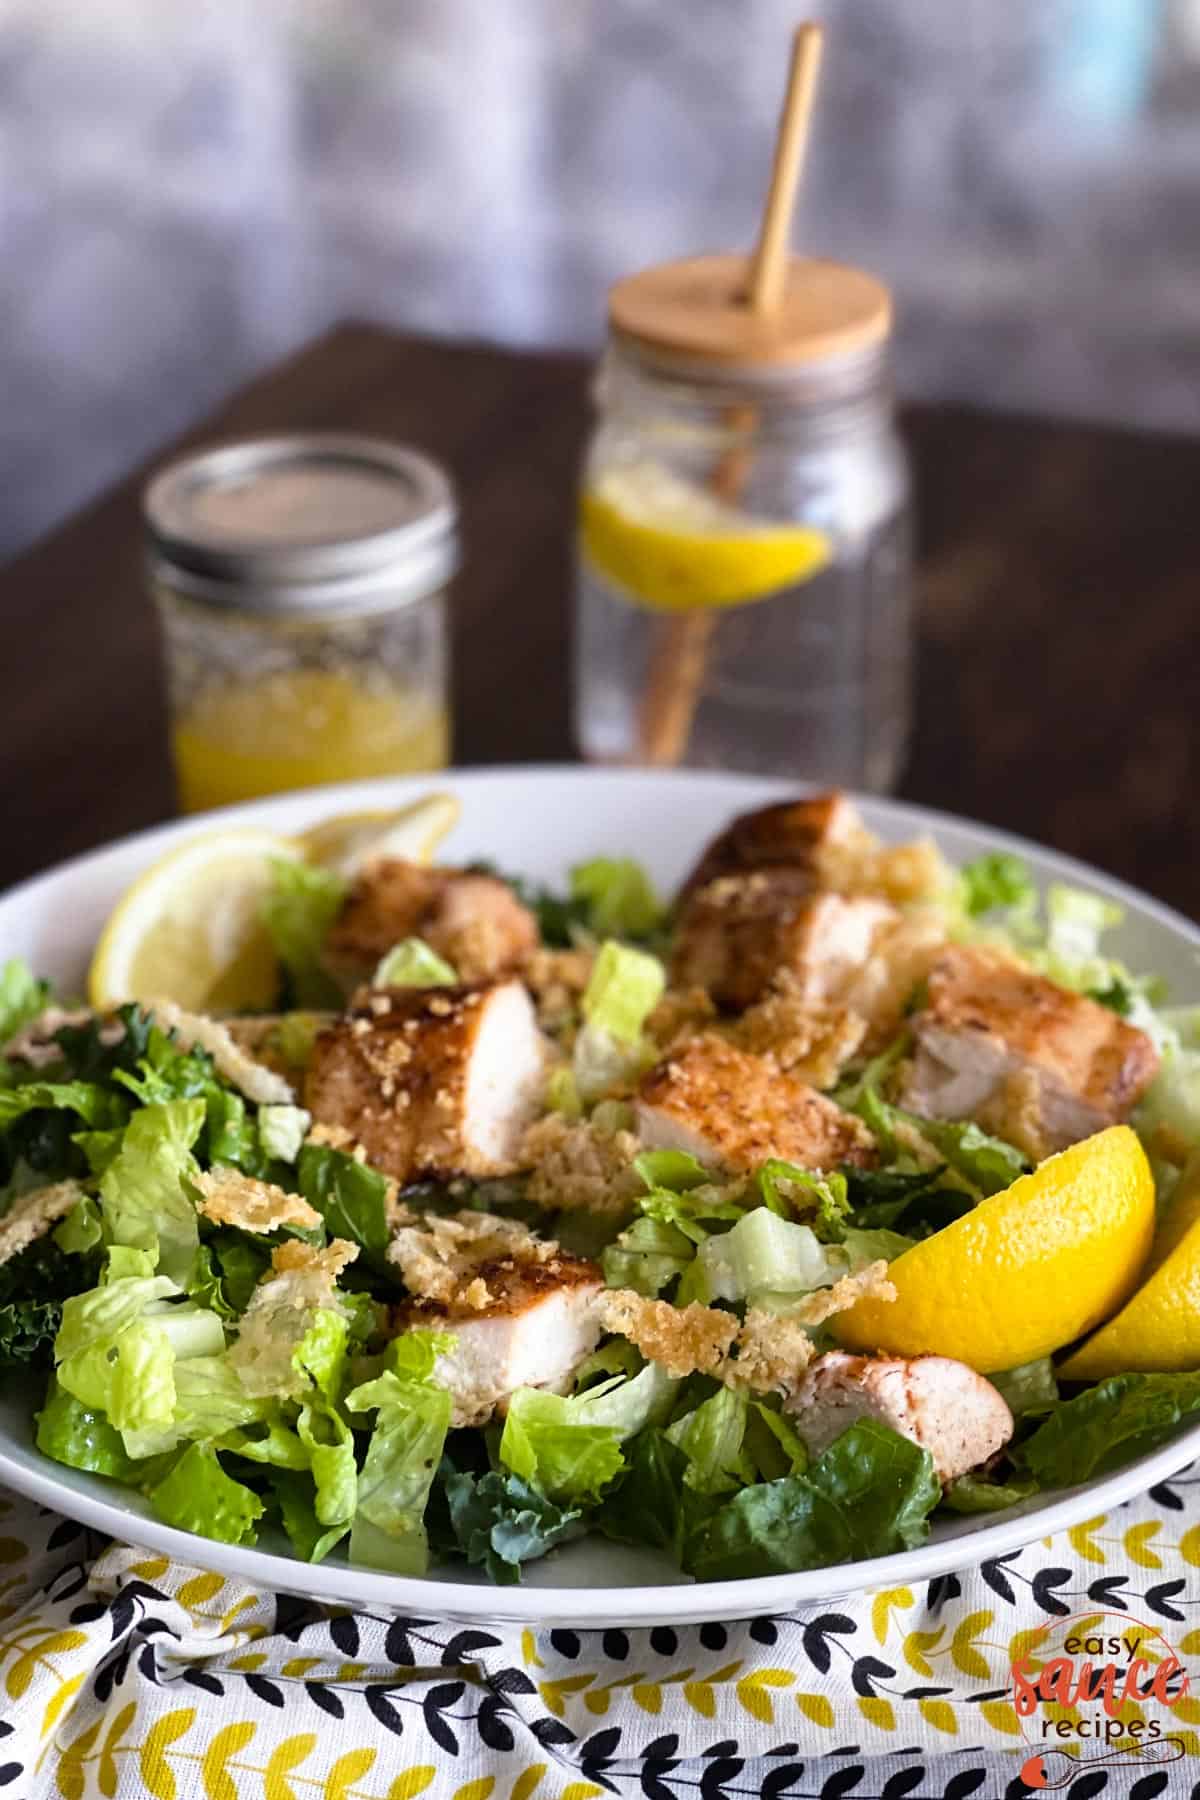 caesar salad with lemon vinaigrette on a plate